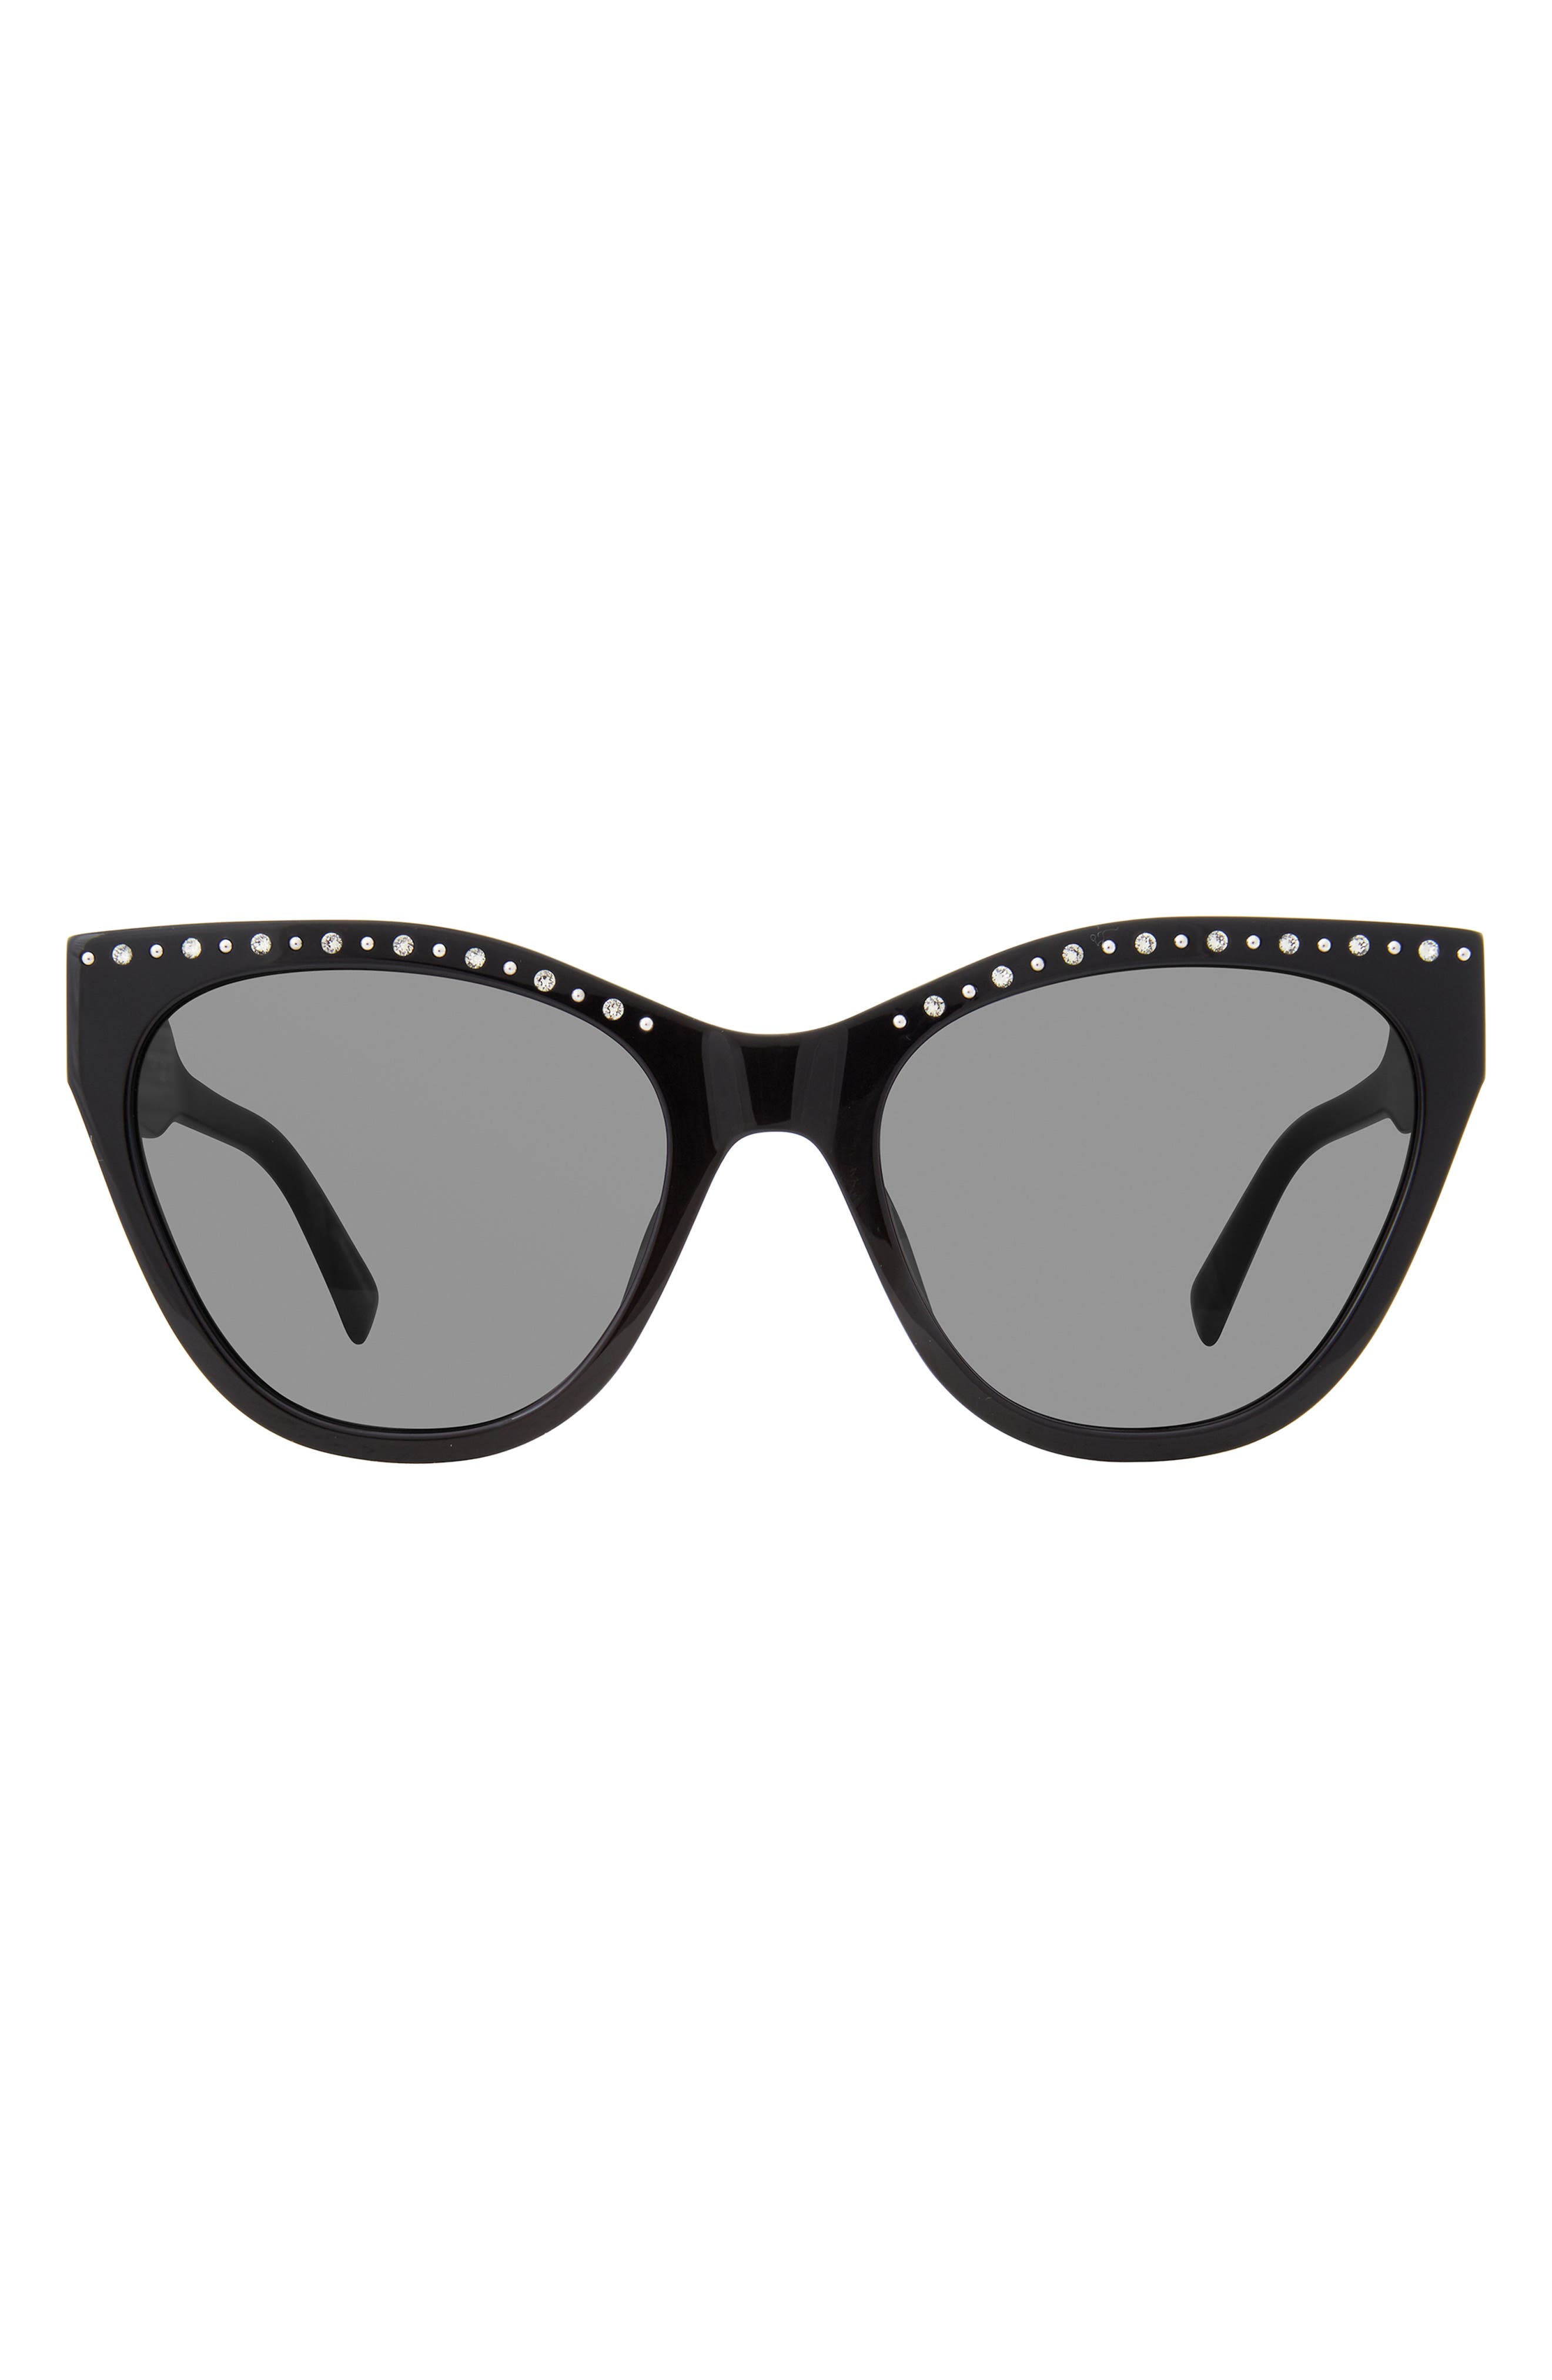 Rebecca Minkoff Martina 55mm Studded Eye Sunglasses in Black/Grey Blue at Nordstrom